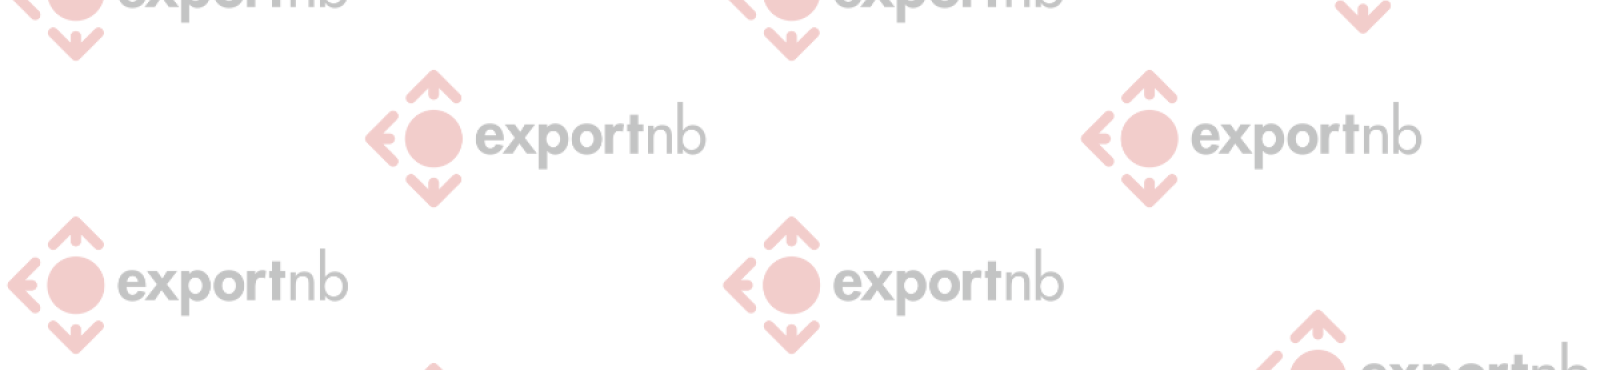 ExportNB logo banner